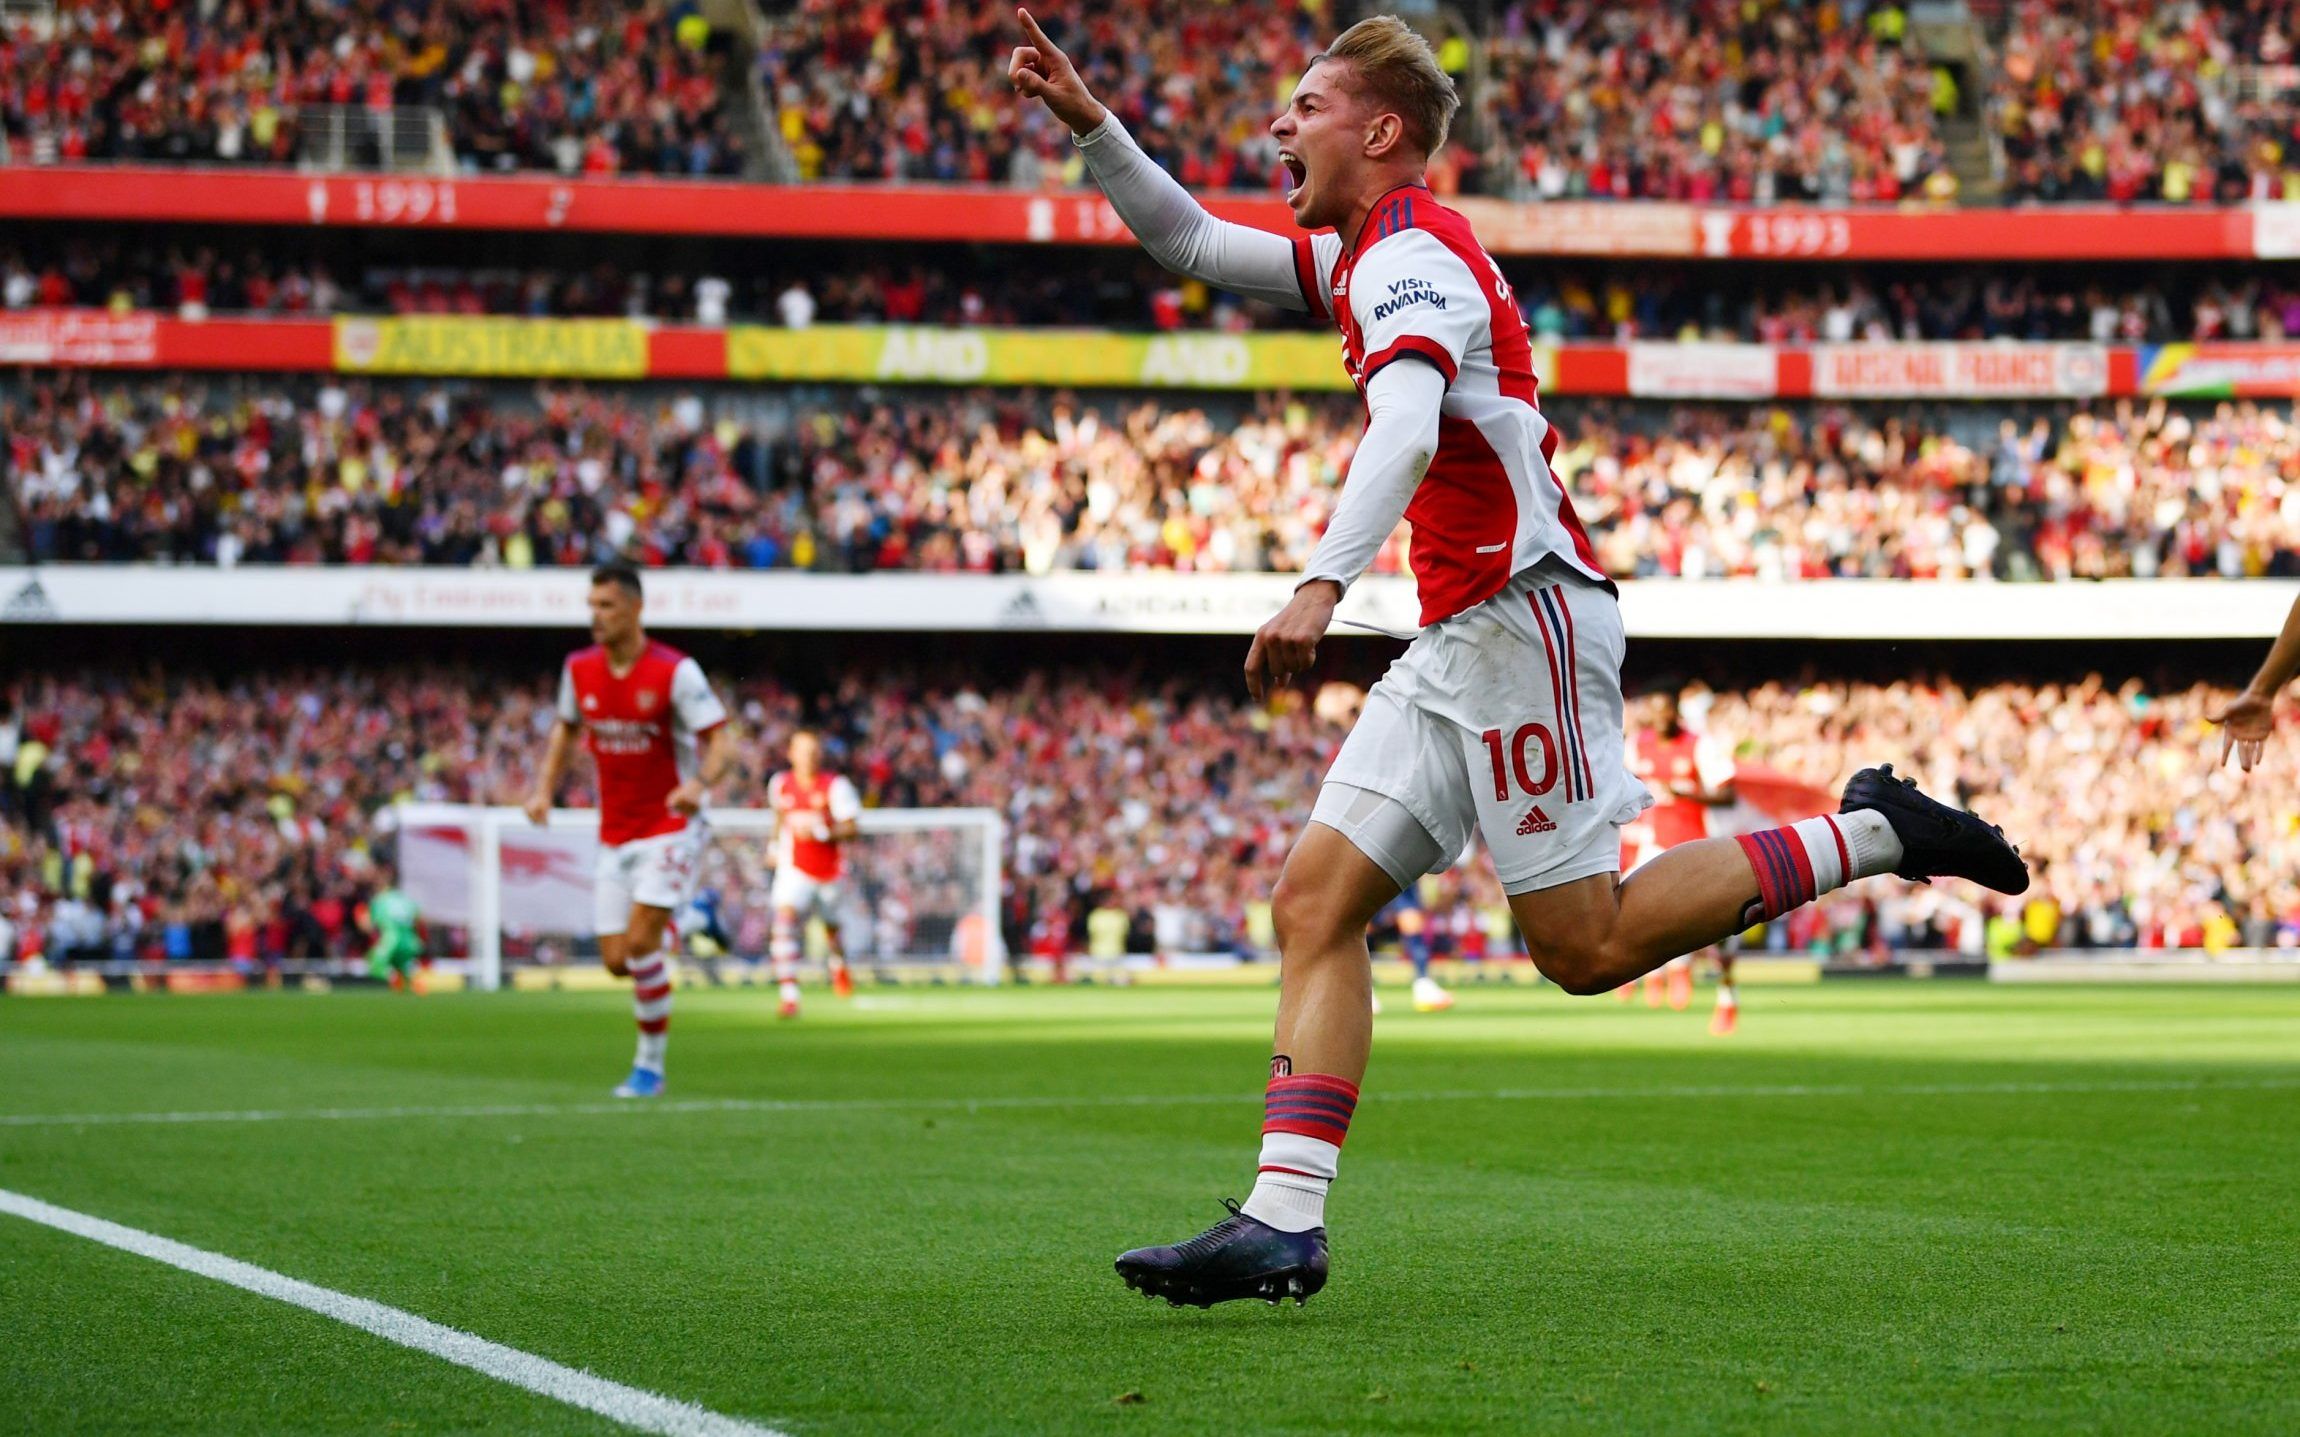 Arsenal midfielder Emile Smith Rowe celebrates scoring against Tottenham Hotspur in the north London derby